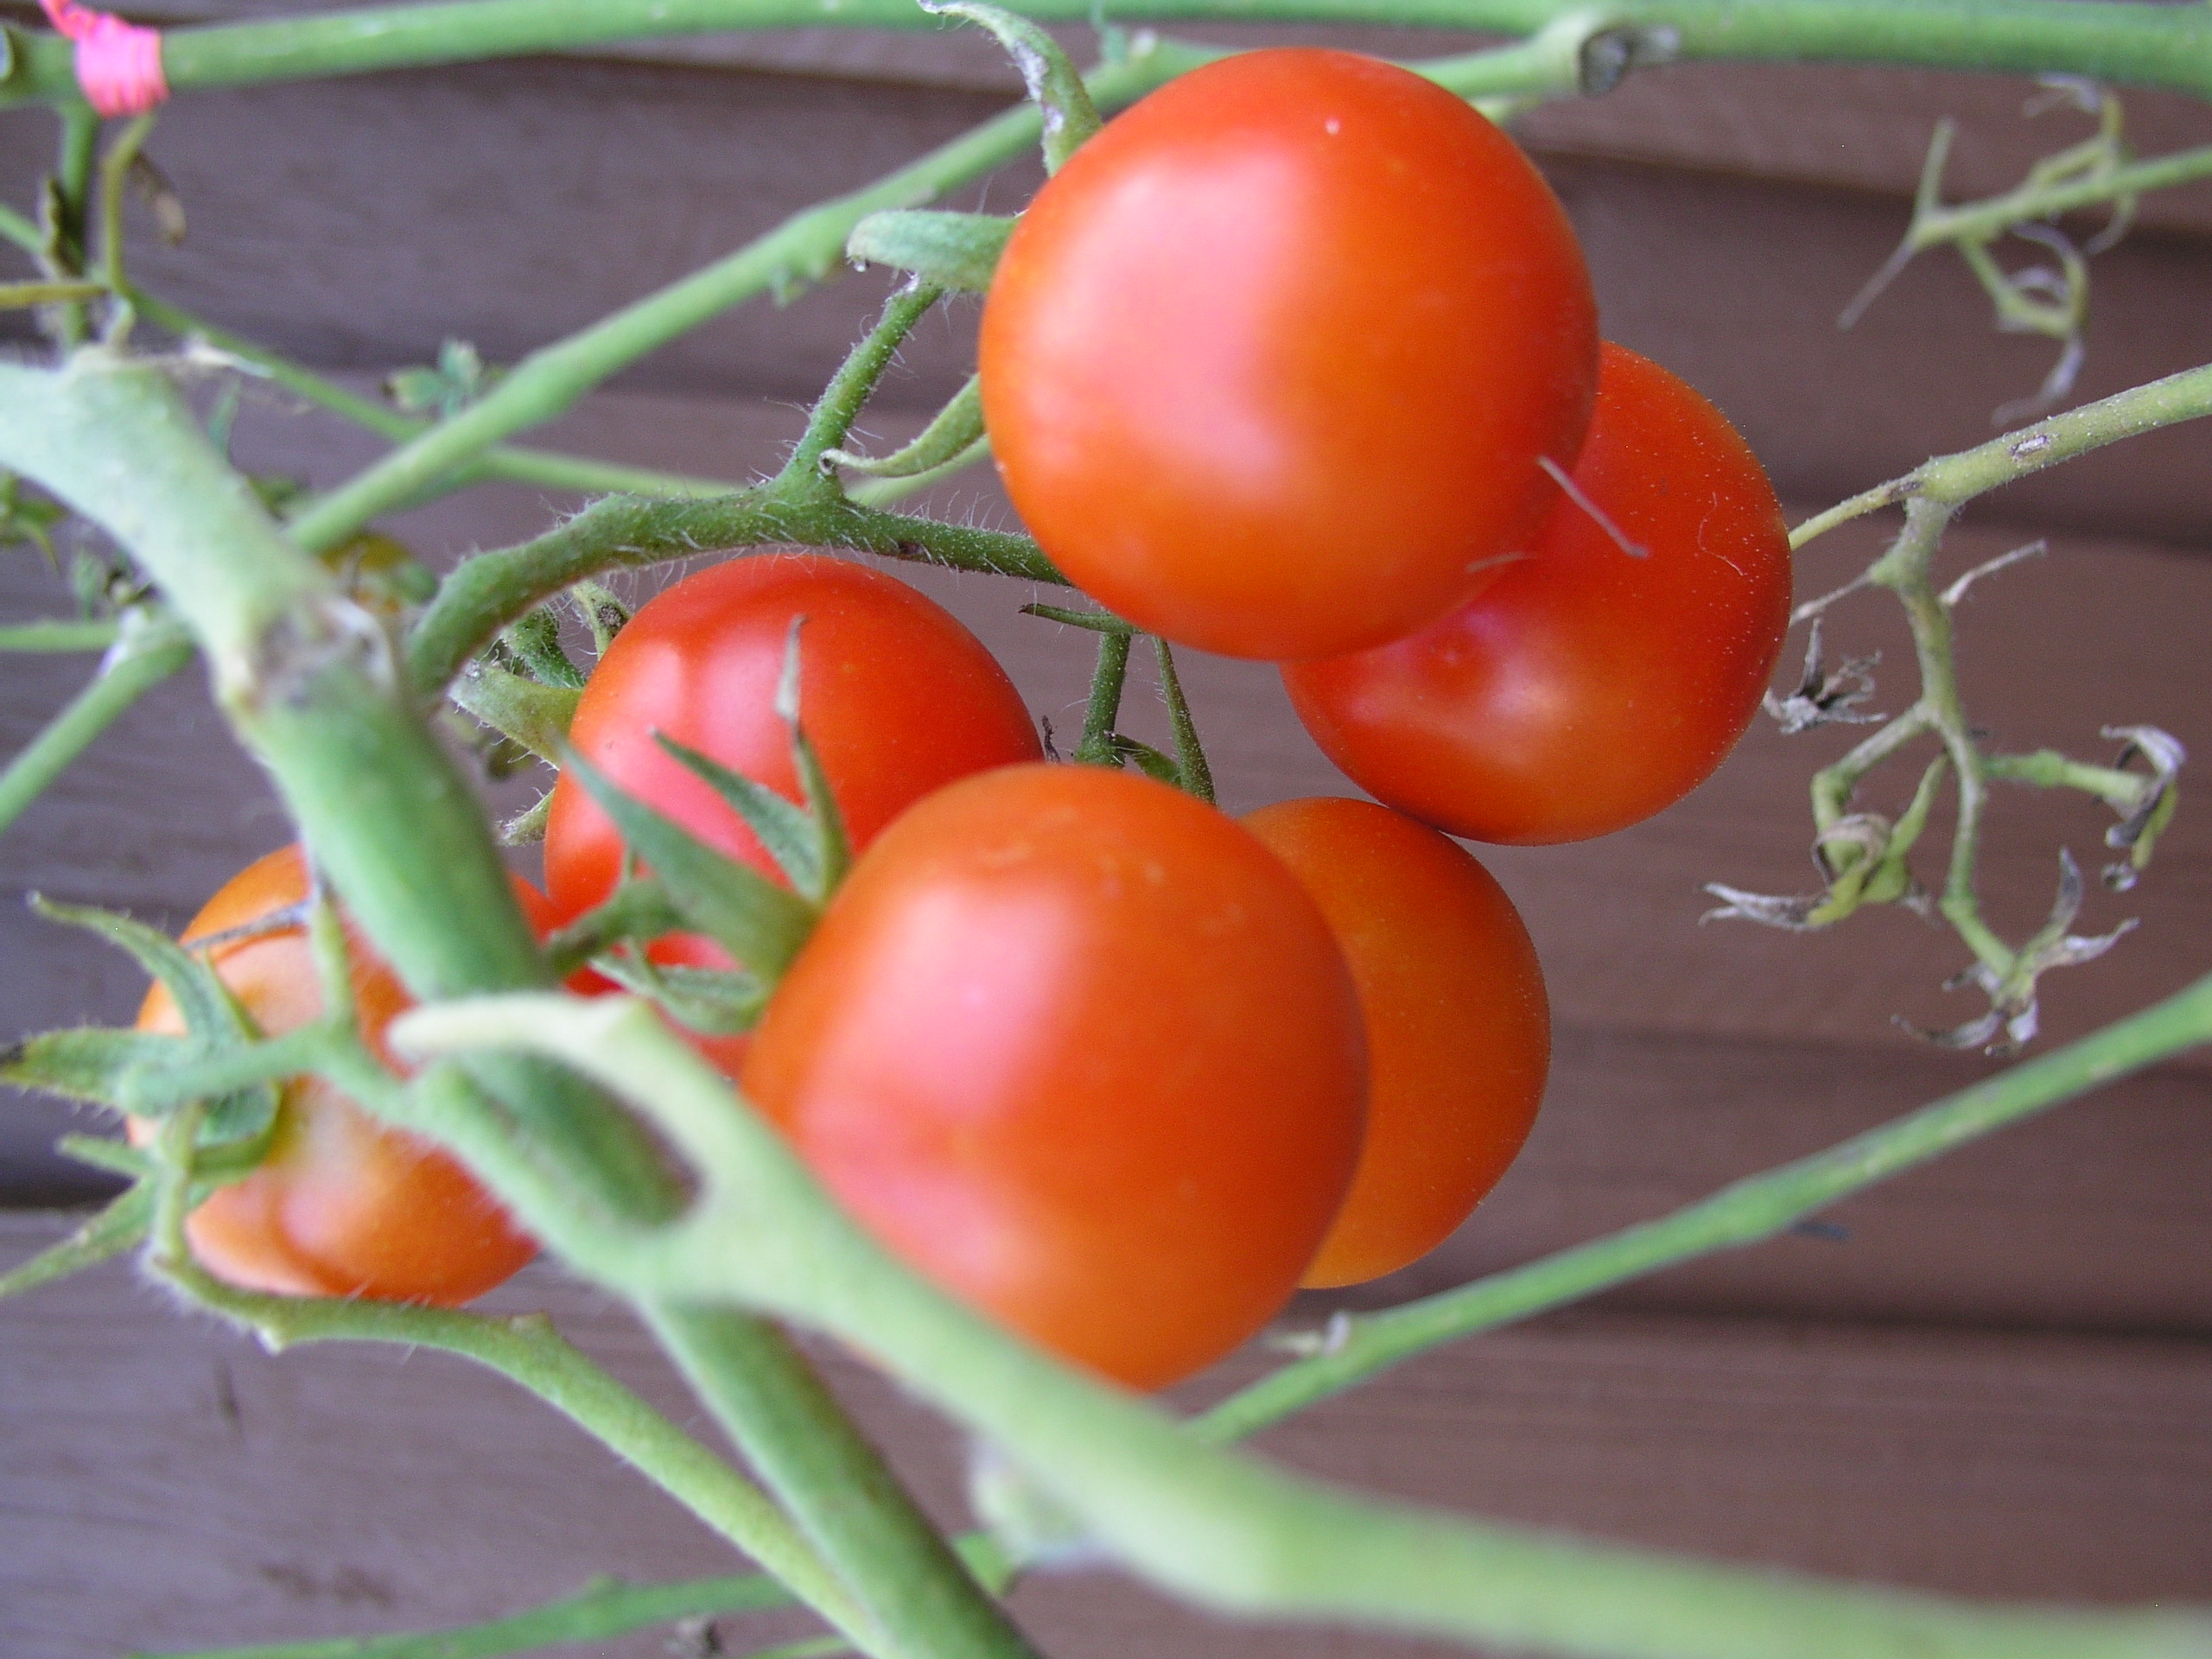 Growing Tomatoes Growin Crazy Acres